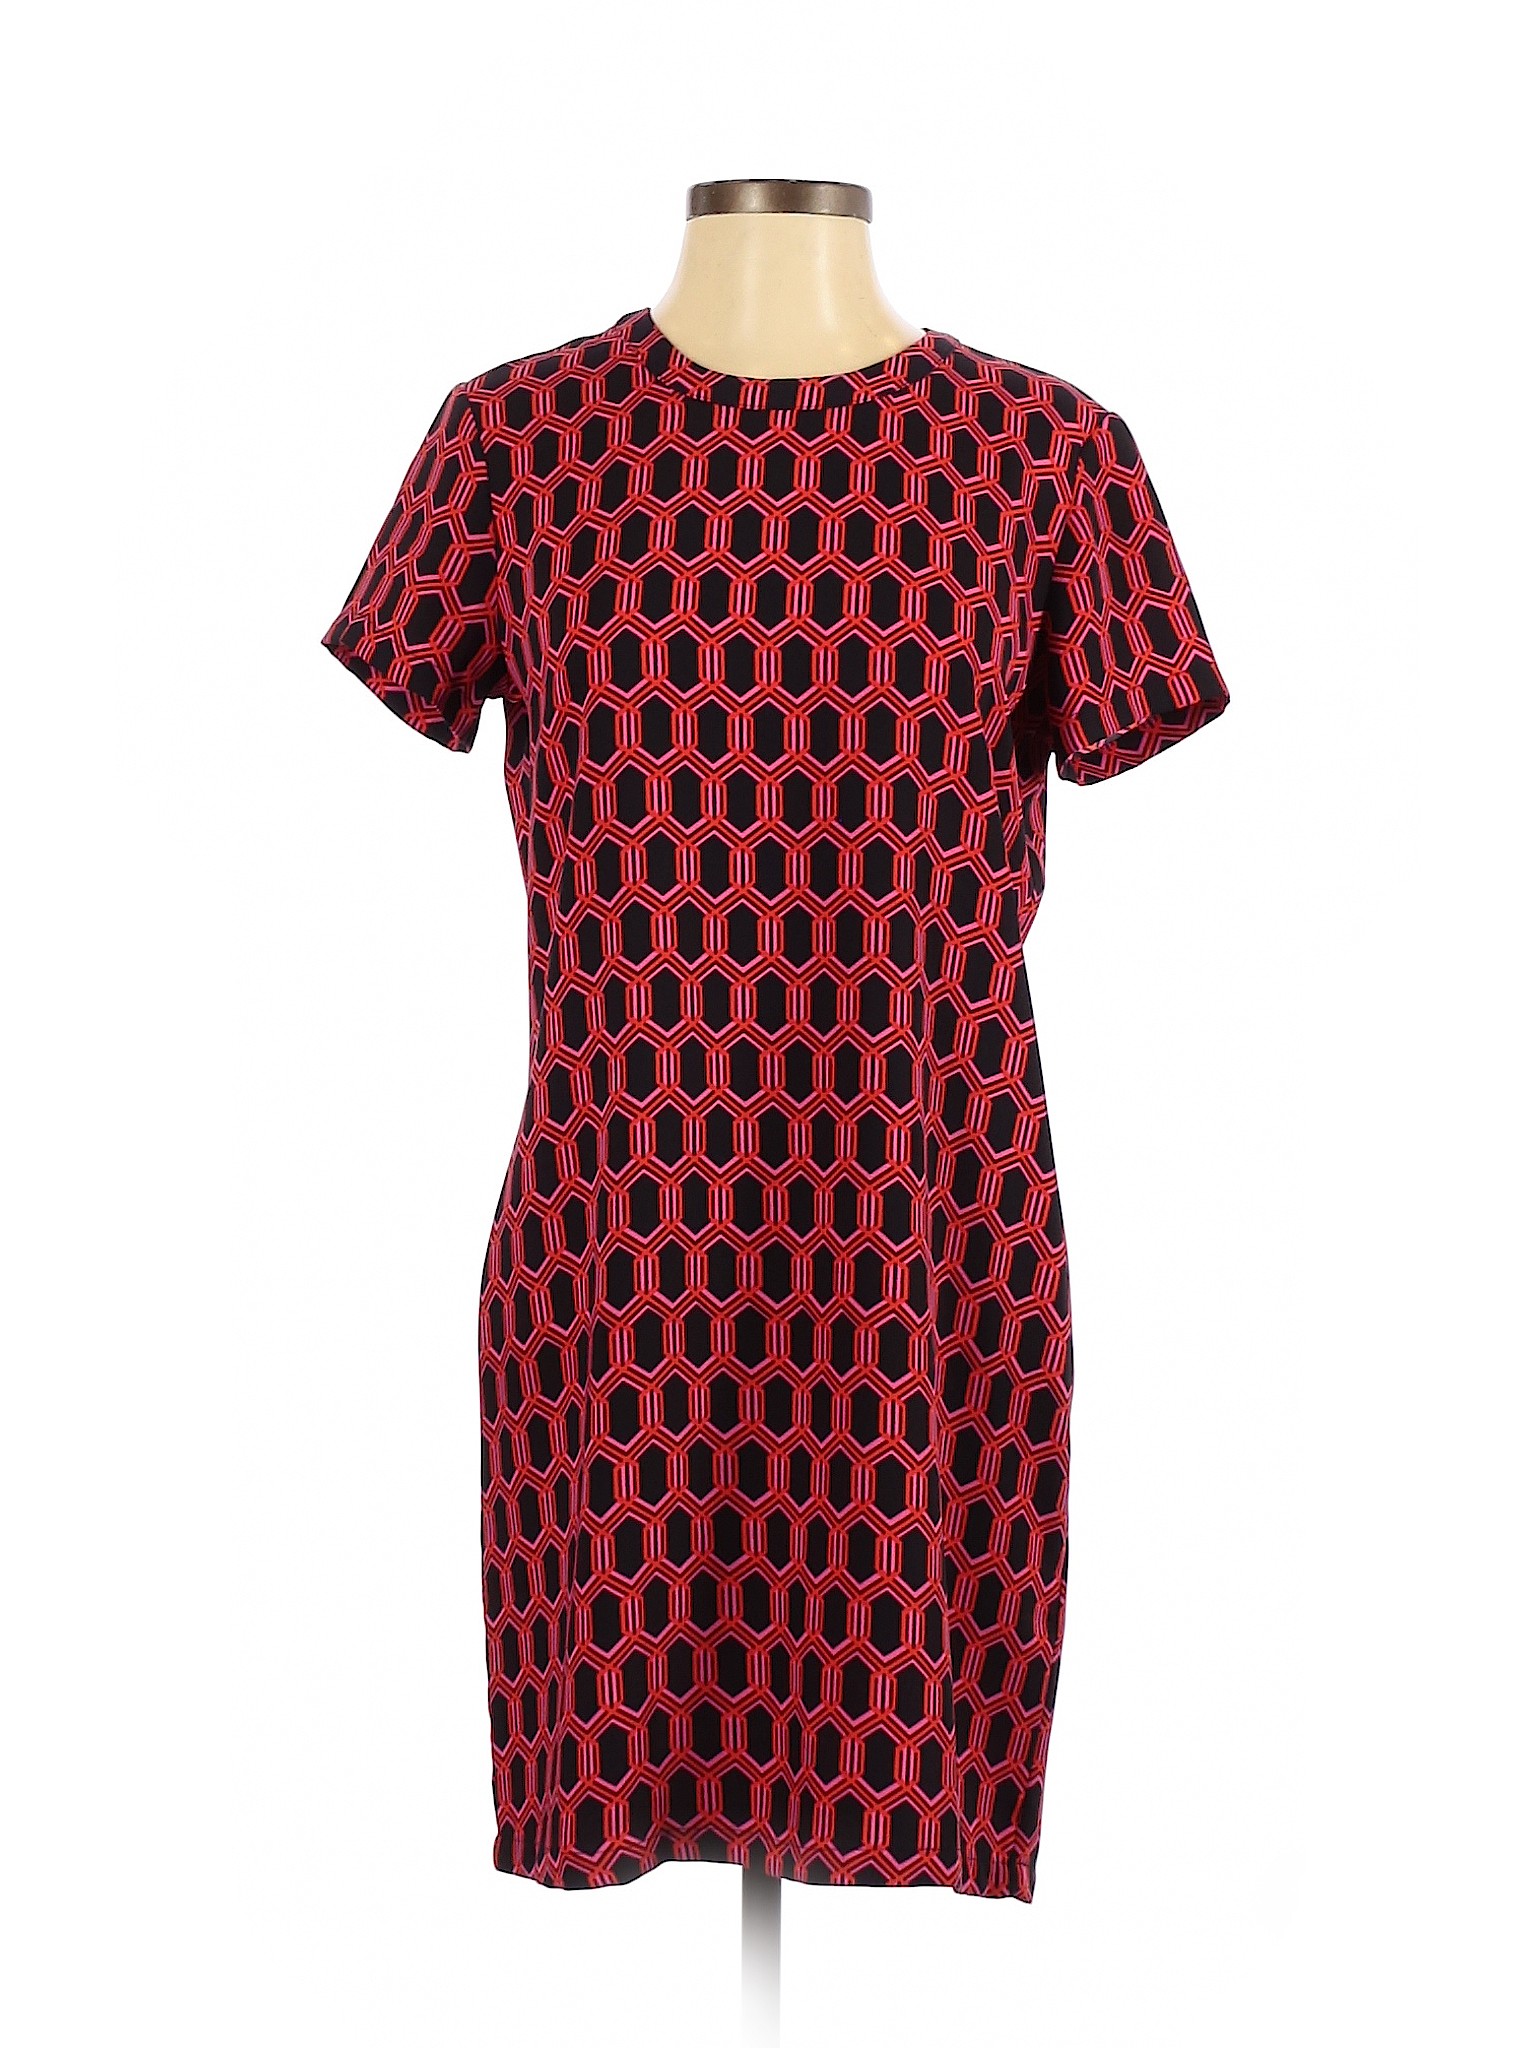 Adrienne Vittadini Women Red Casual Dress 4 | eBay